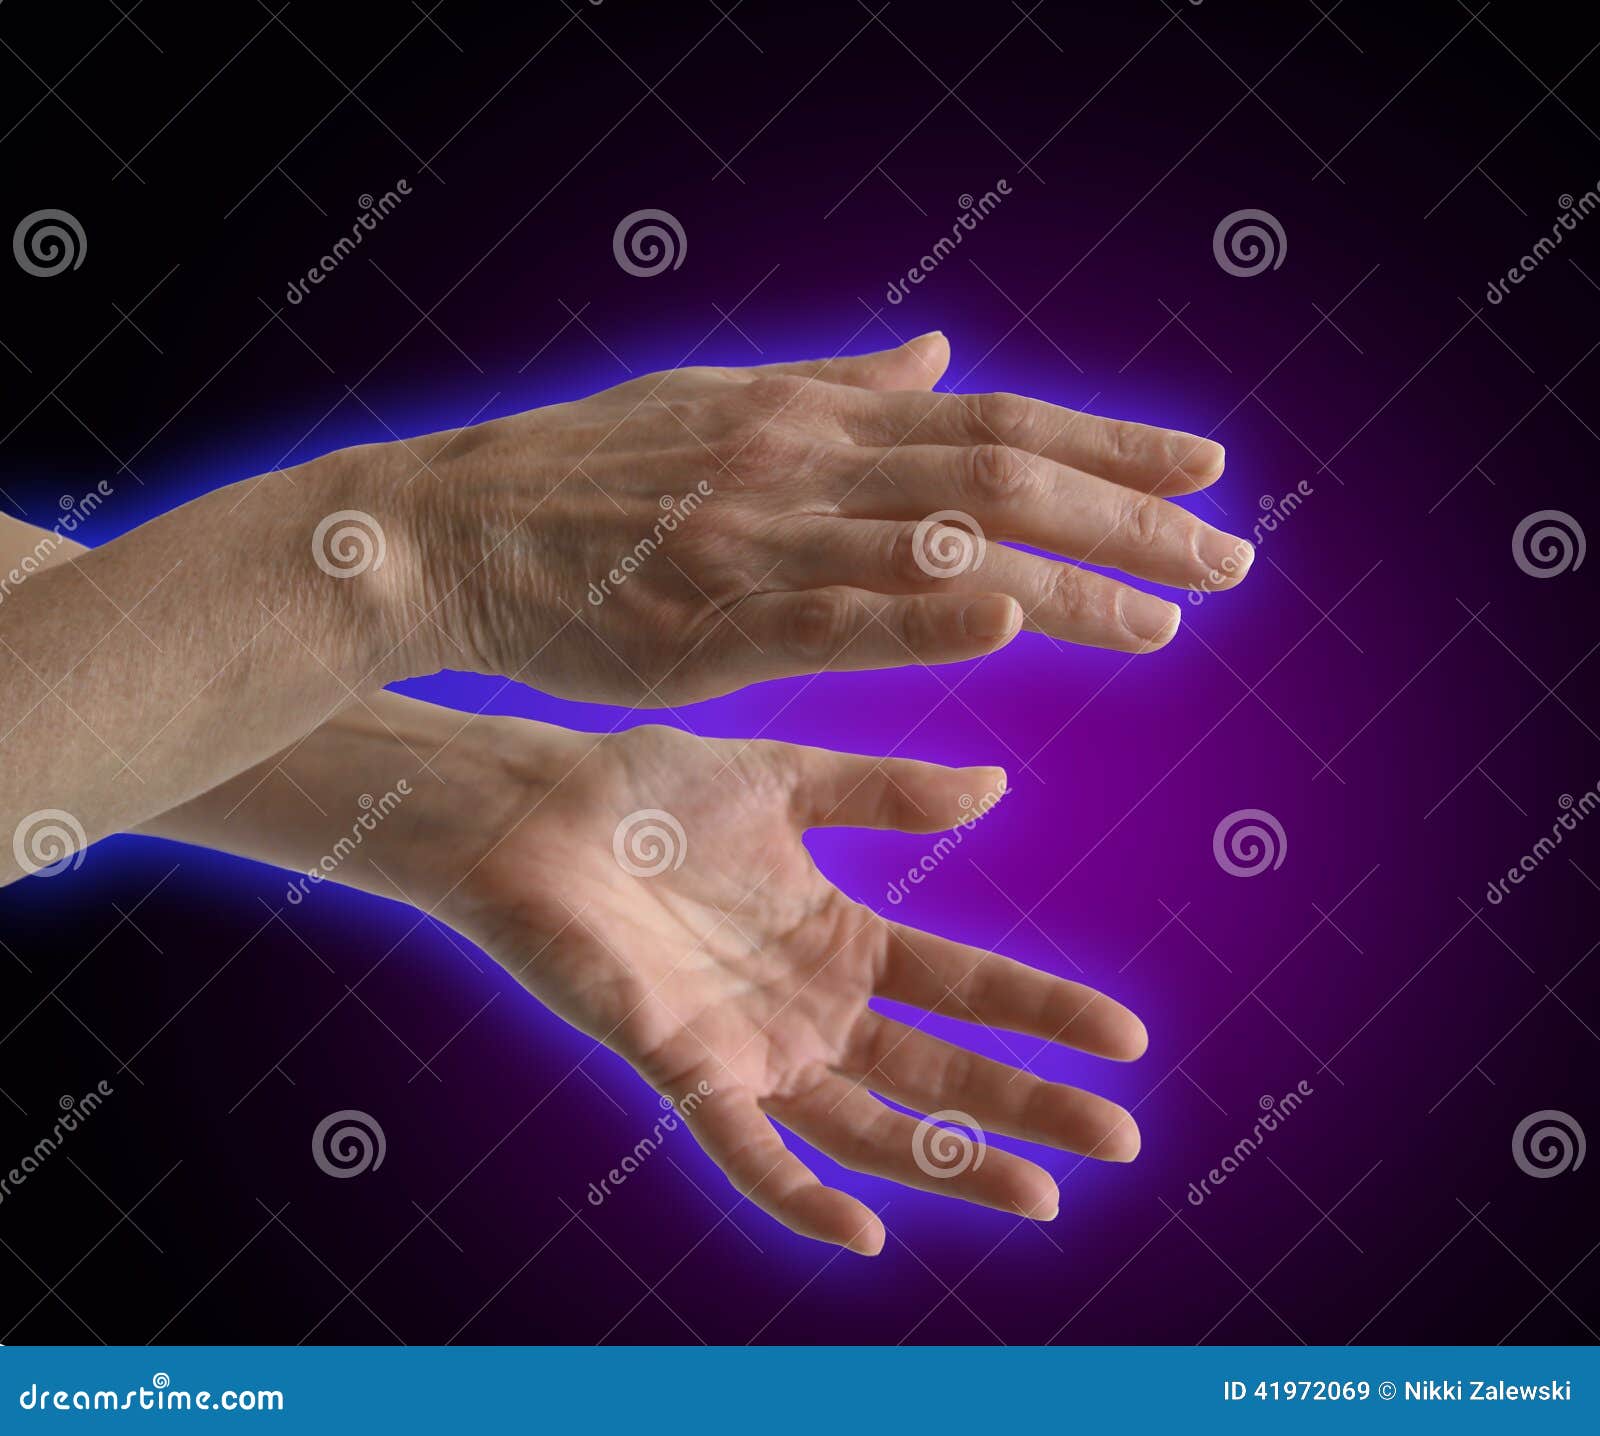 https://thumbs.dreamstime.com/z/electromagnetic-aura-around-healer-s-hands-blue-dark-purple-background-41972069.jpg